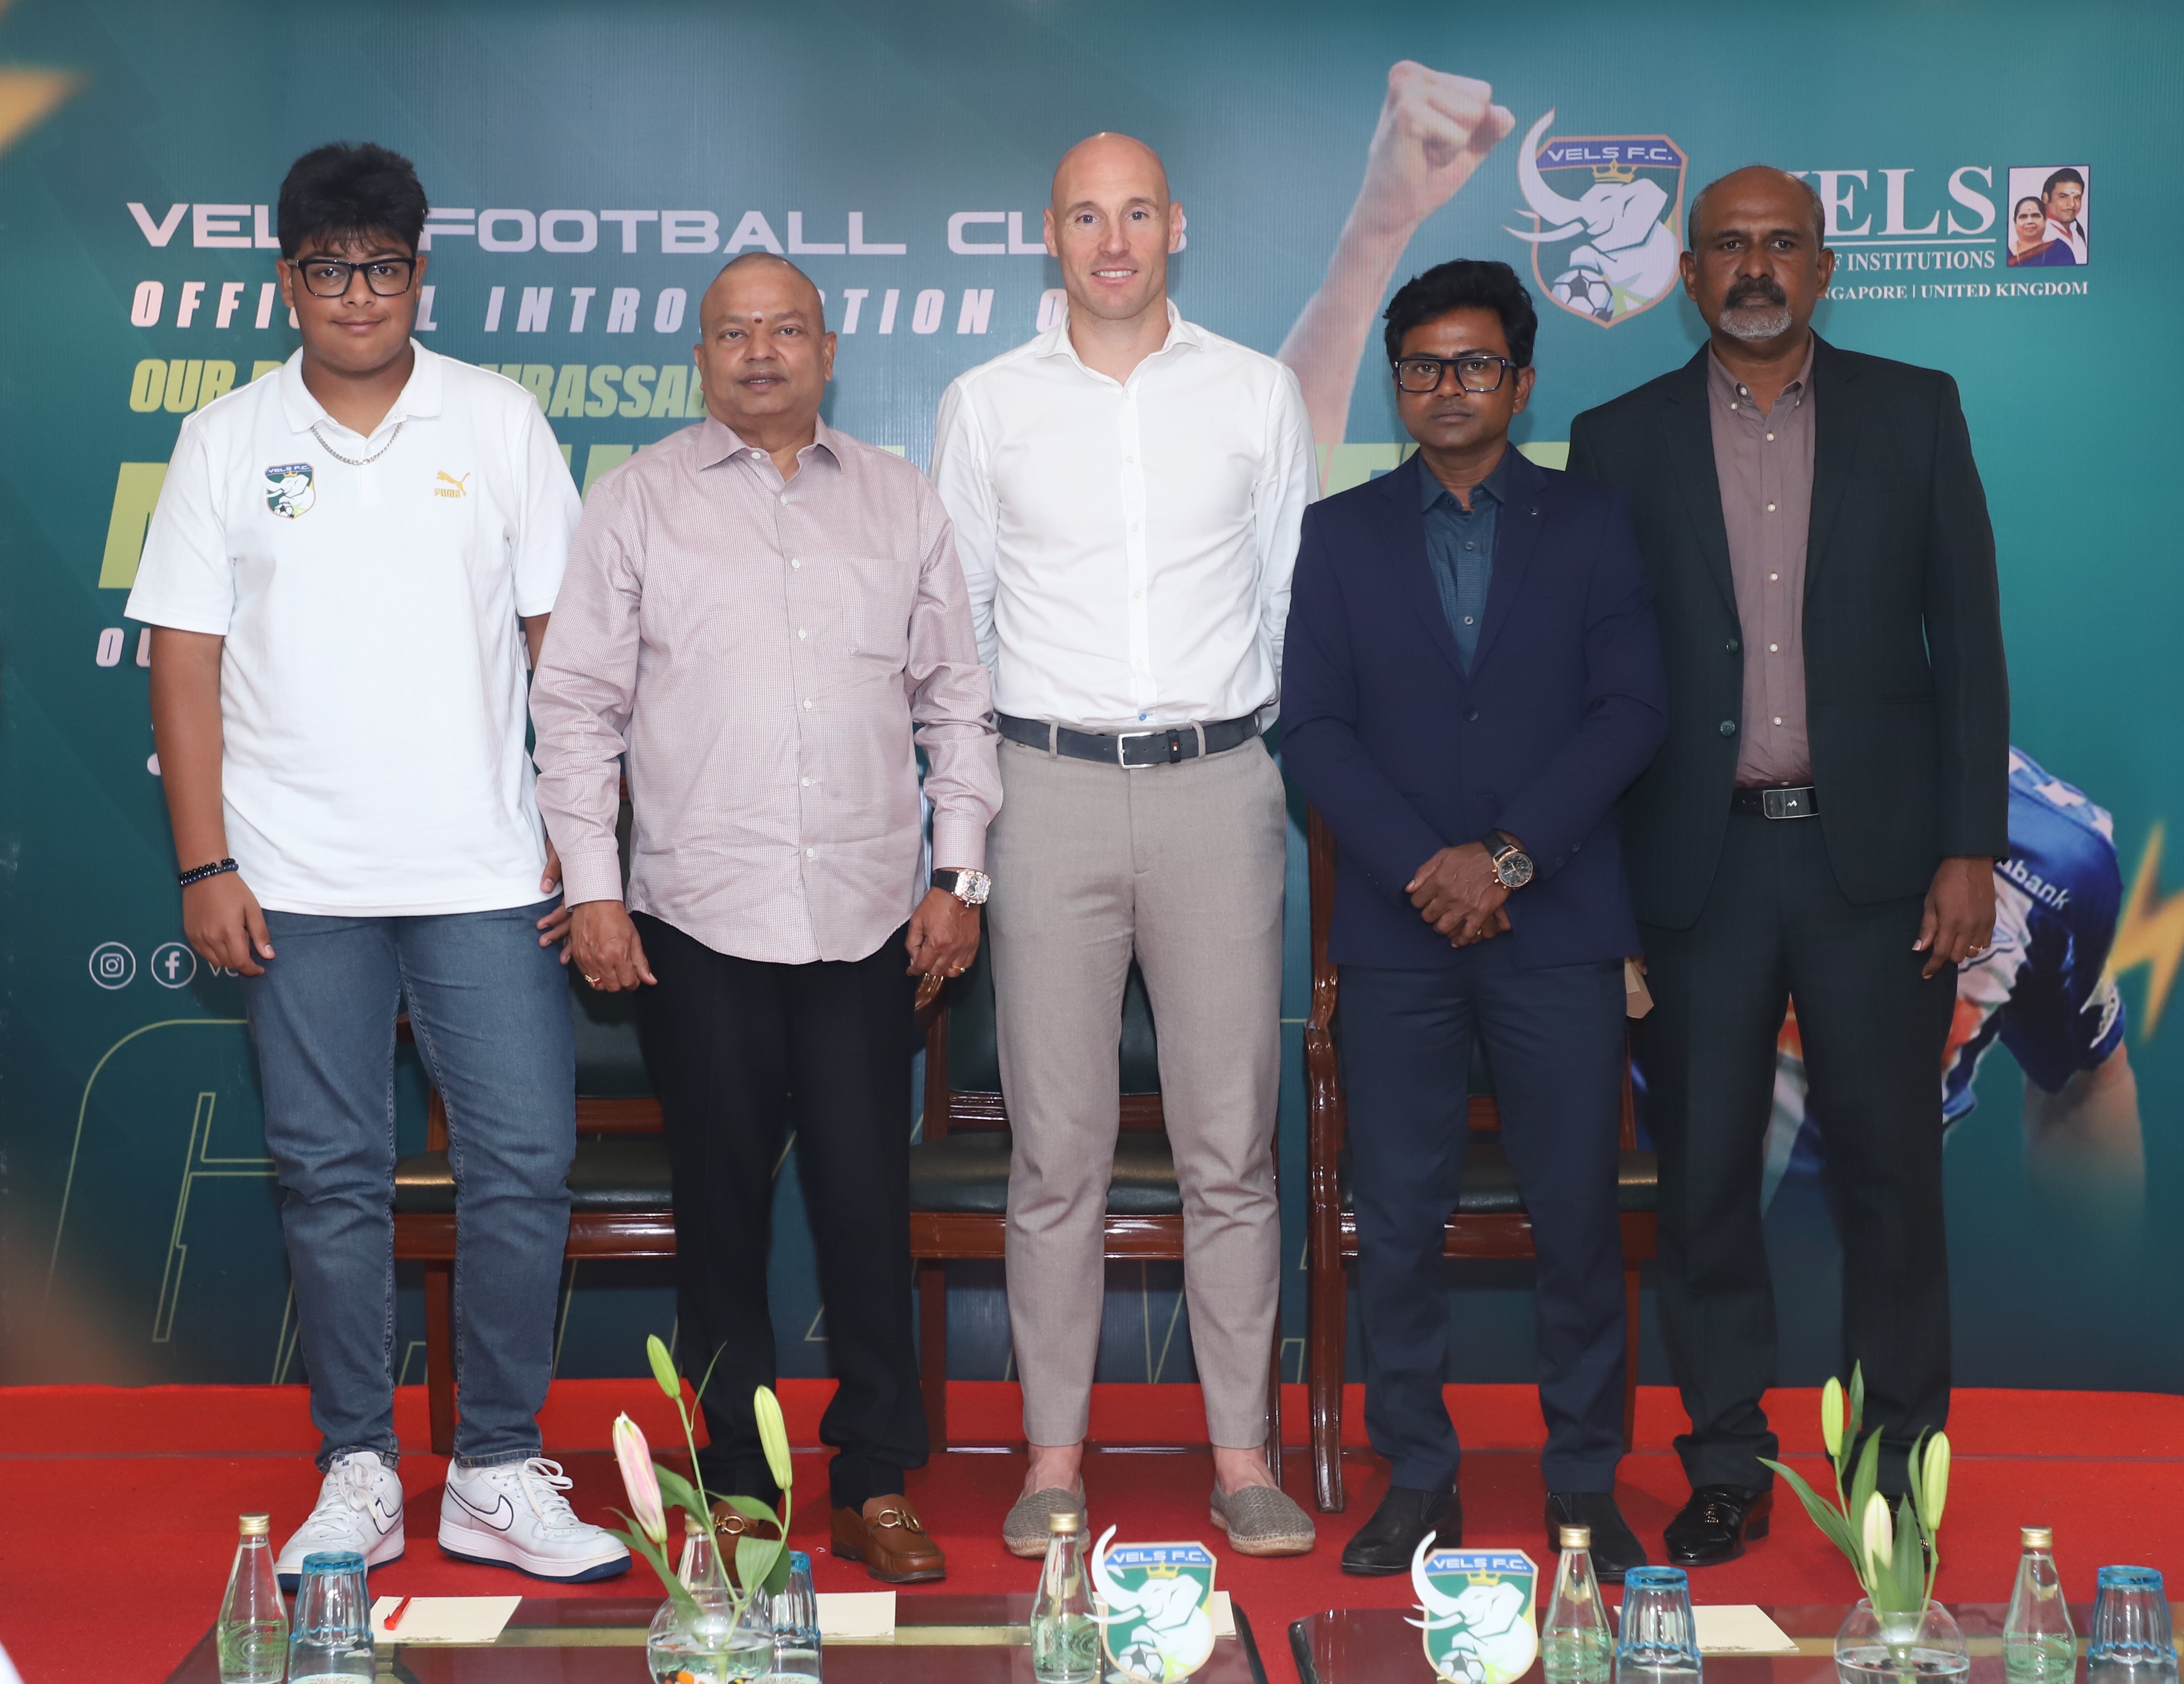 DR. ISHARI K GANESH, PRESIDENT OF VELS FOOTBALL CLUB ANNOUNCES INTERNATIONAL AMBASSADOR OF VELS FC – GAIZKA TOQUERO